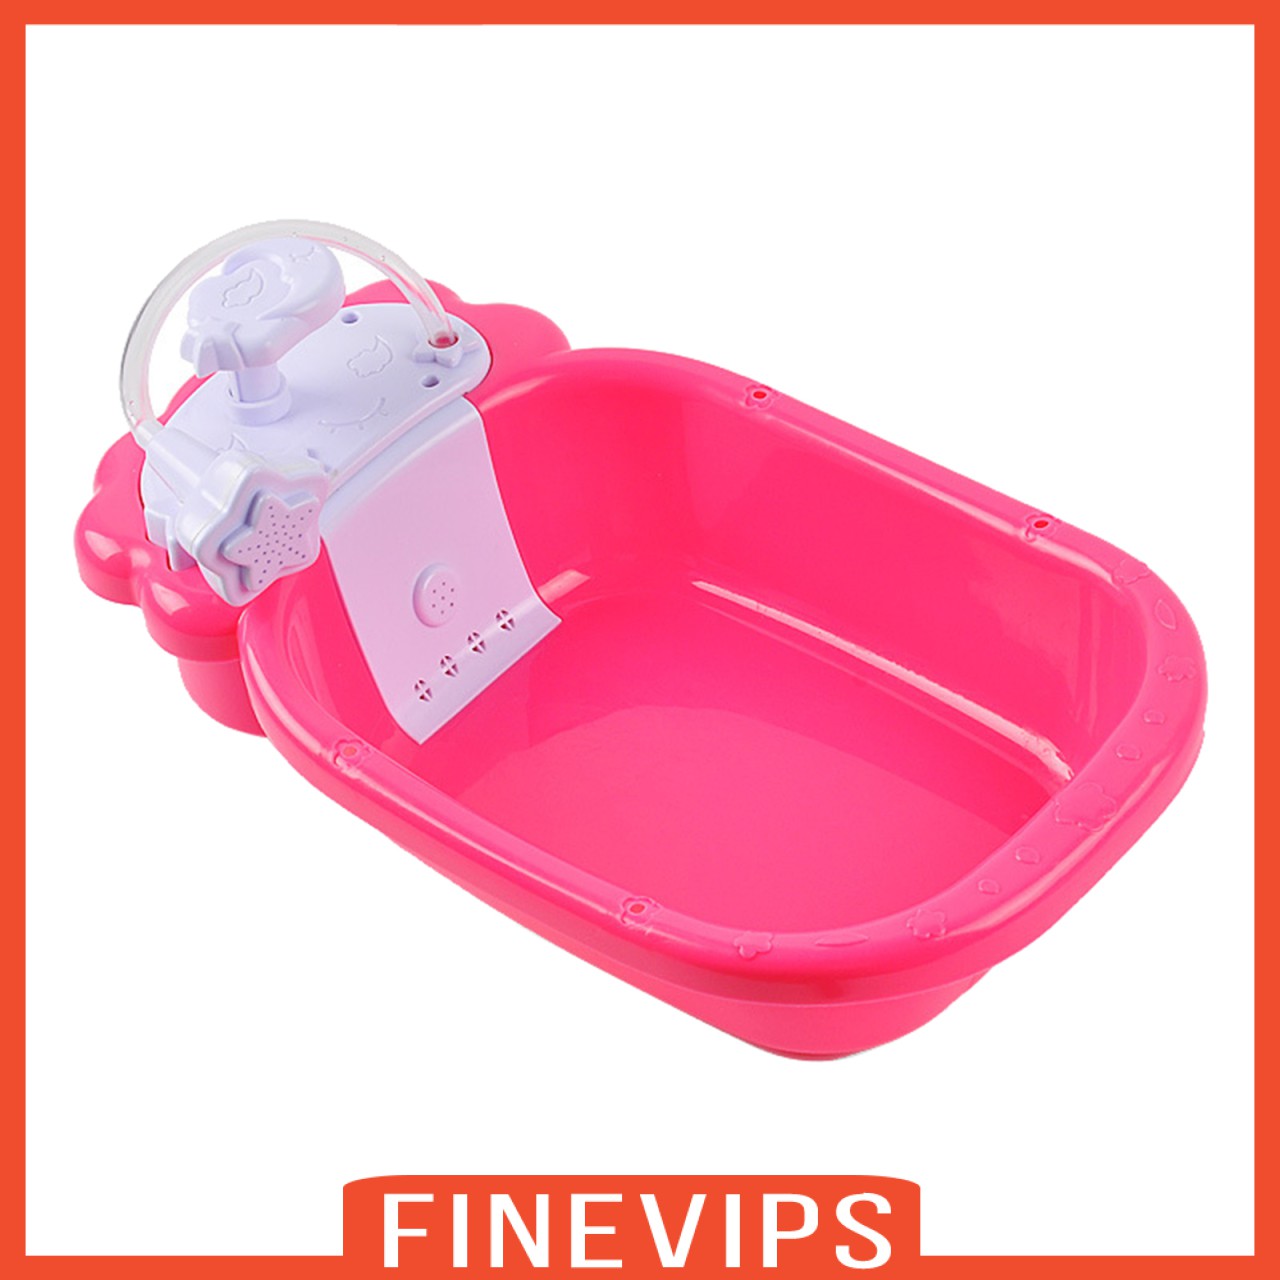 [FINEVIPS] Doll Bath Play Tub with Shower Pretend Play Infant Baby Kids Doll Toy Bathtub